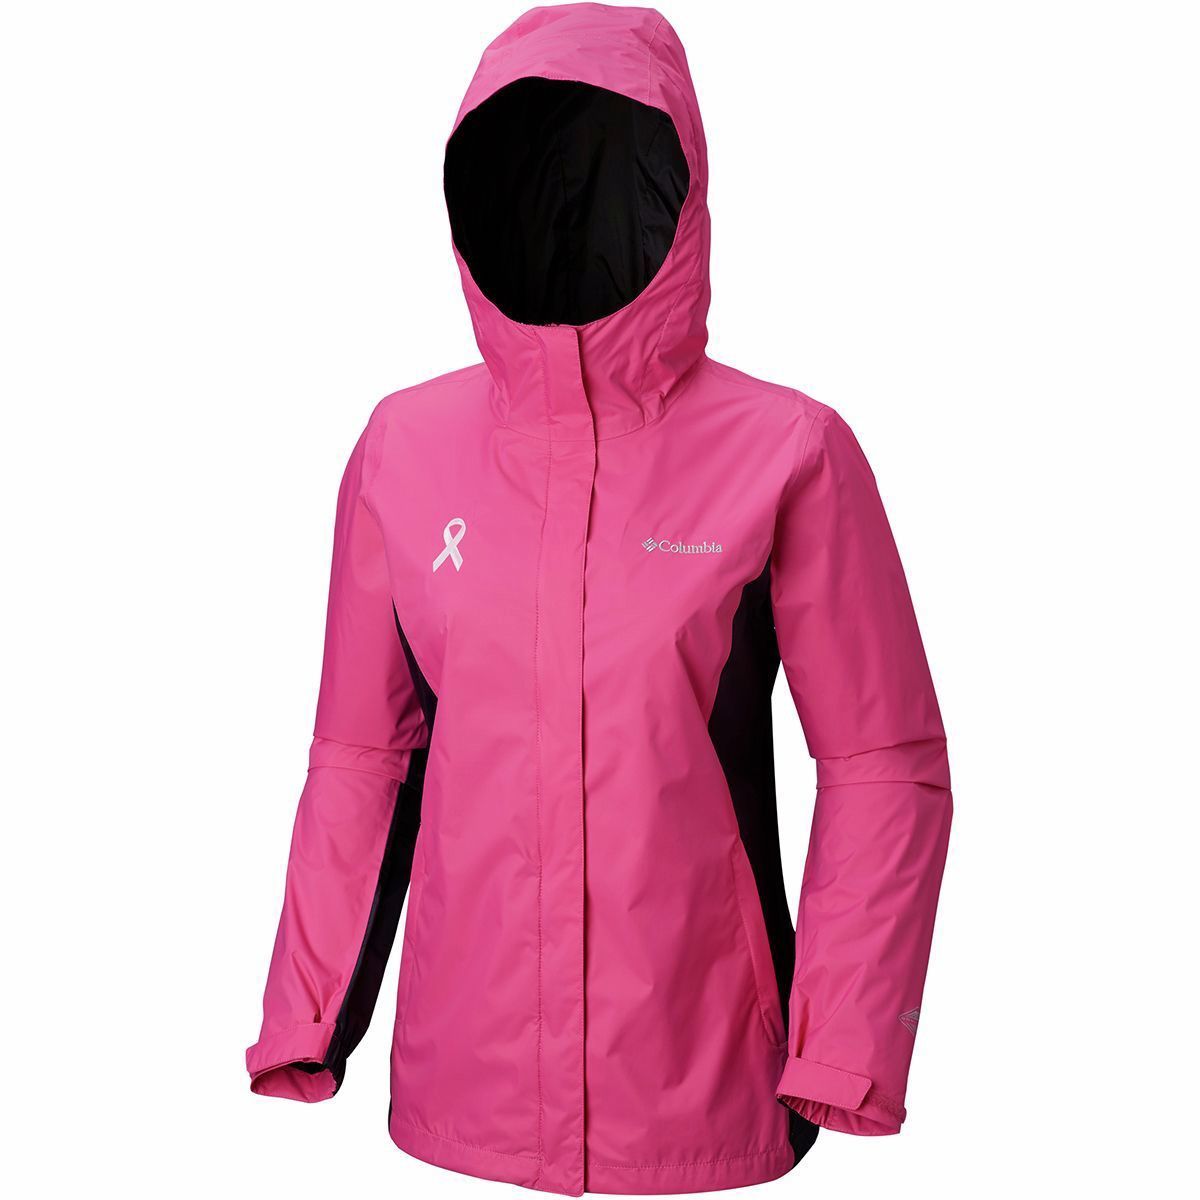 Columbia Tested Tough In Pink II Rain Jacket - Women's